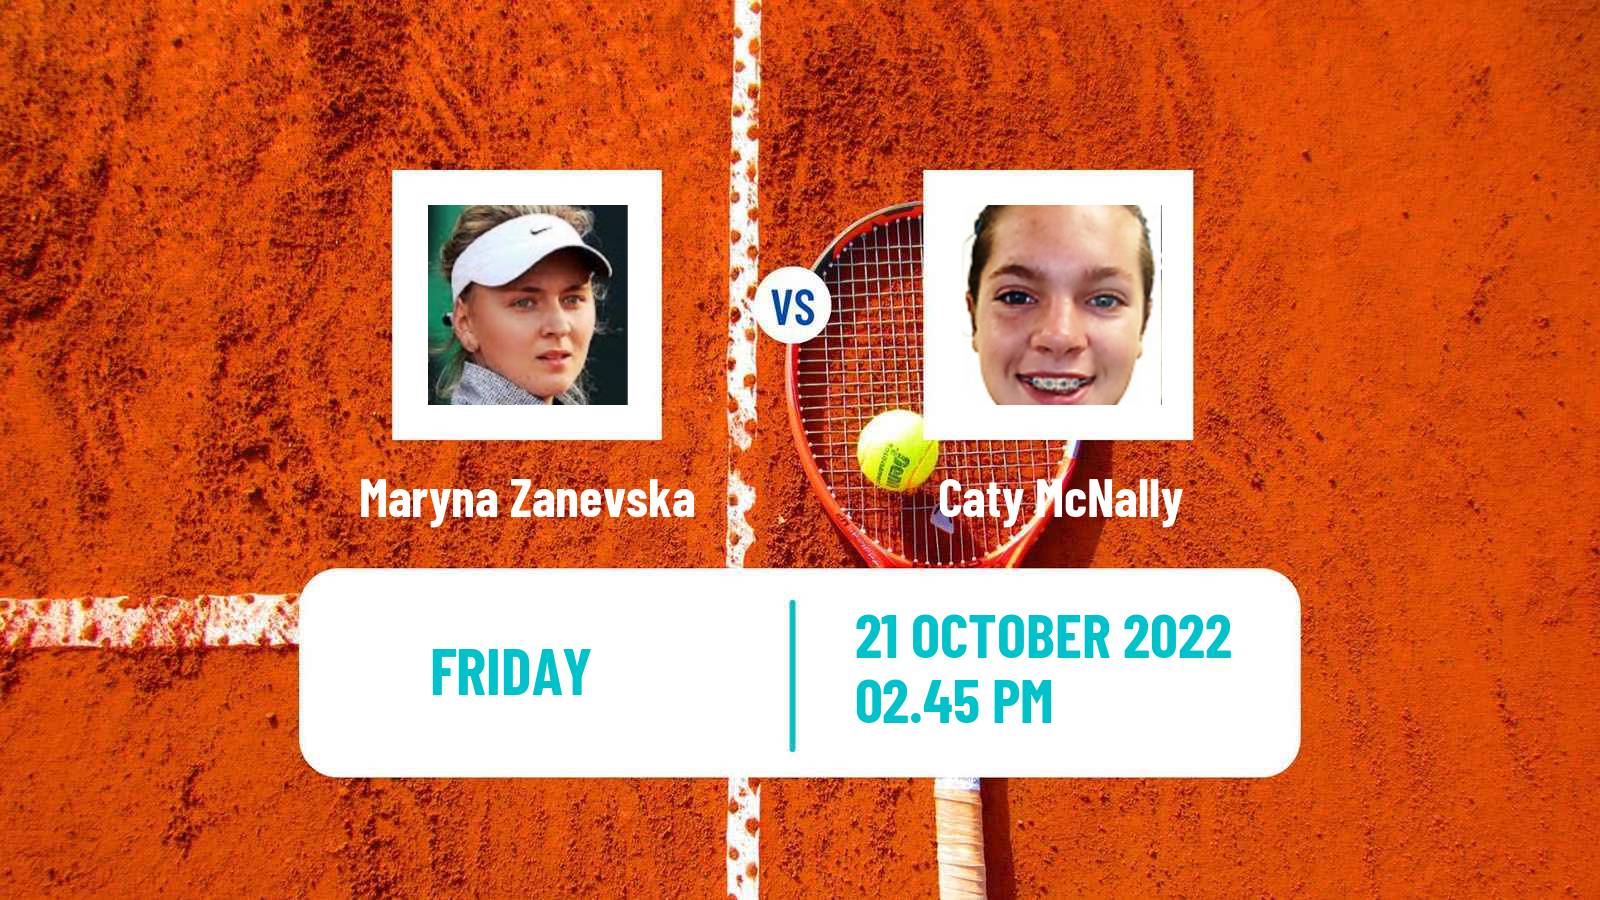 Tennis ATP Challenger Maryna Zanevska - Caty McNally